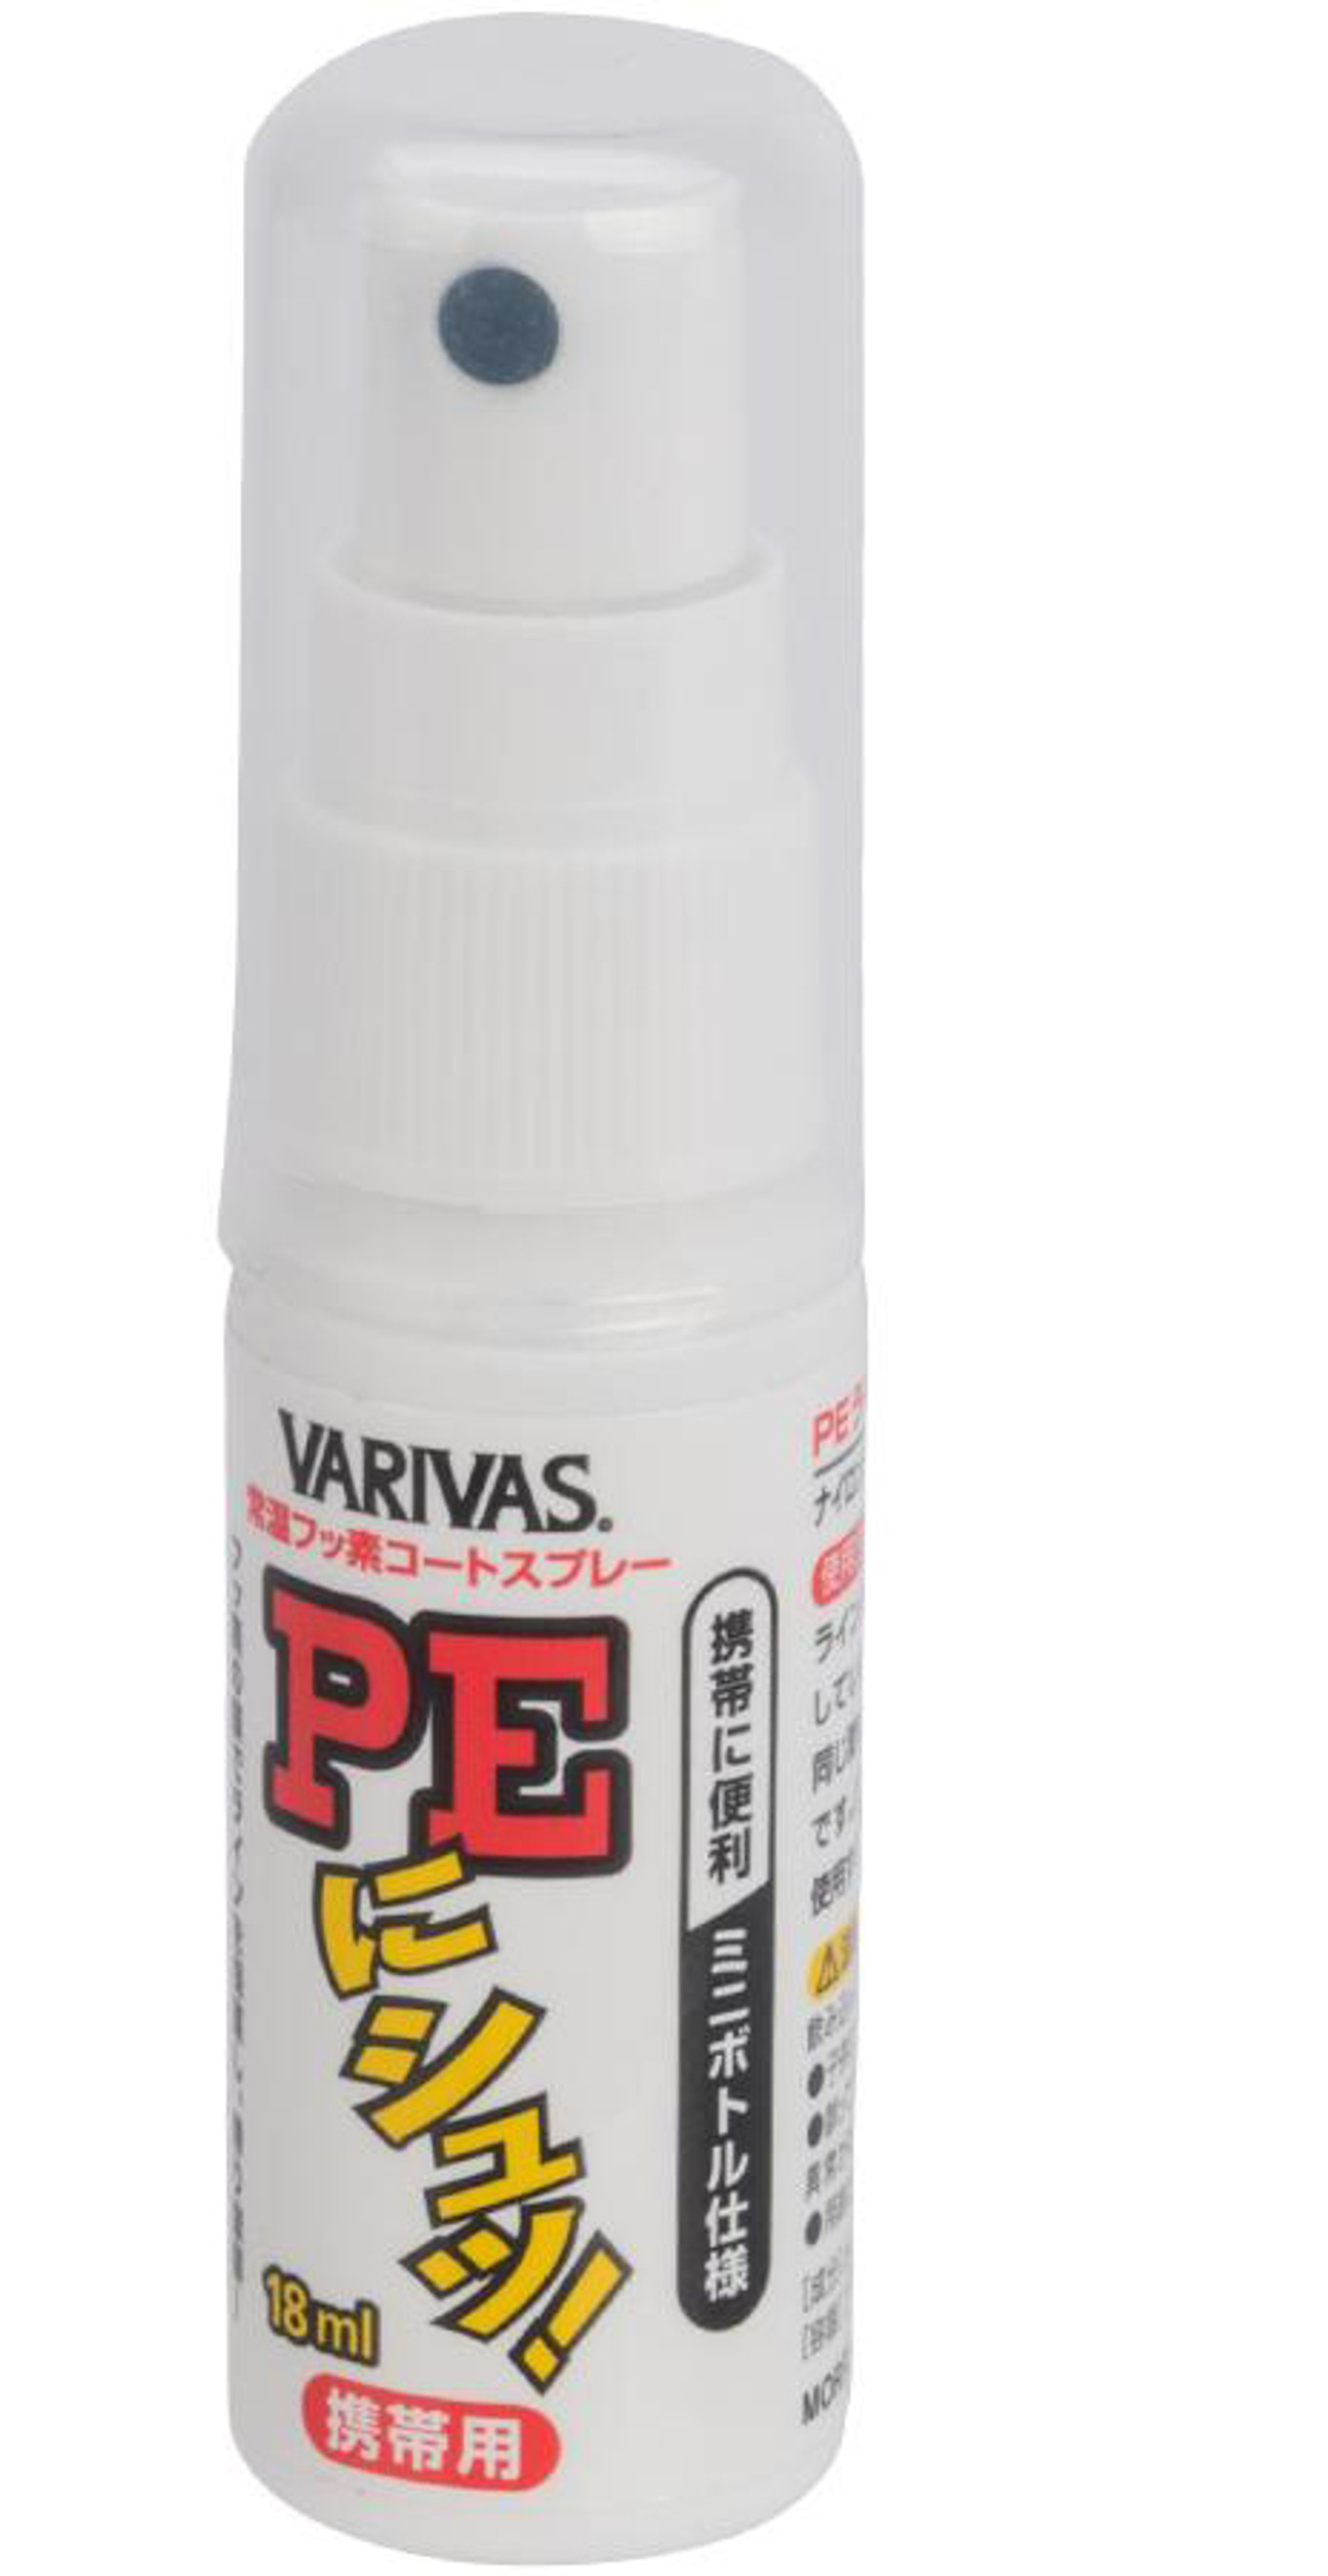 VARIVAS Braided PE Line Coating Spray (Size: 18mL Spray Bottle)